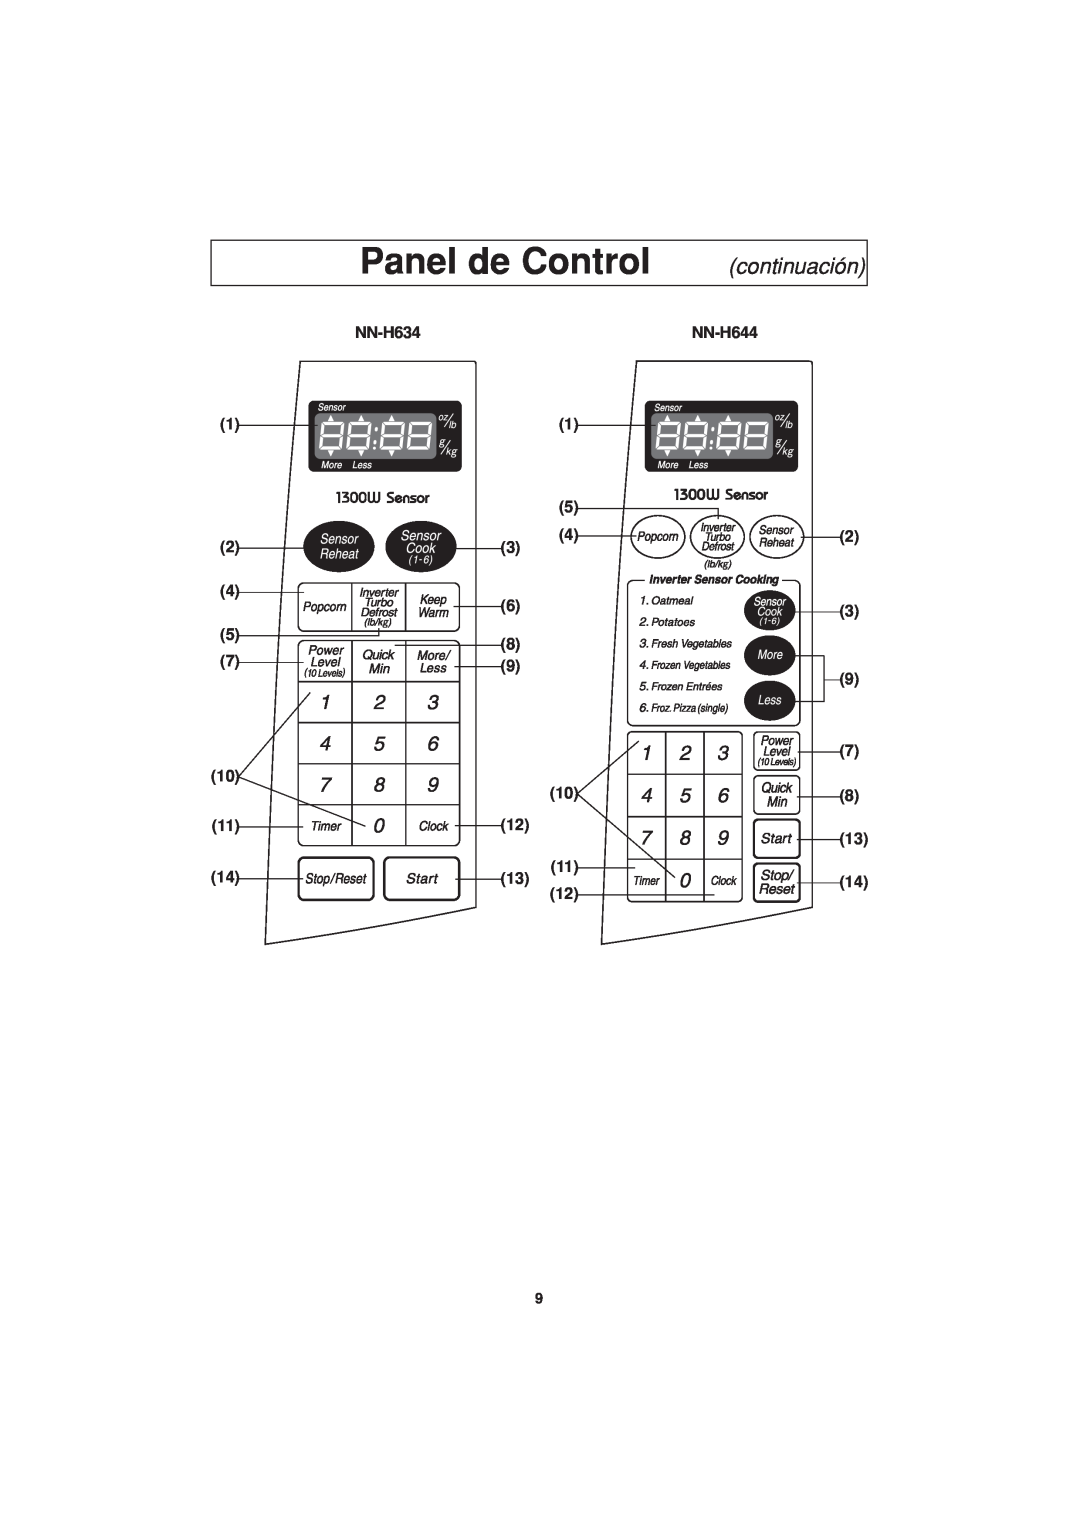 Panasonic NN-H634, NN-H644 important safety instructions Panel de Control, continuación 